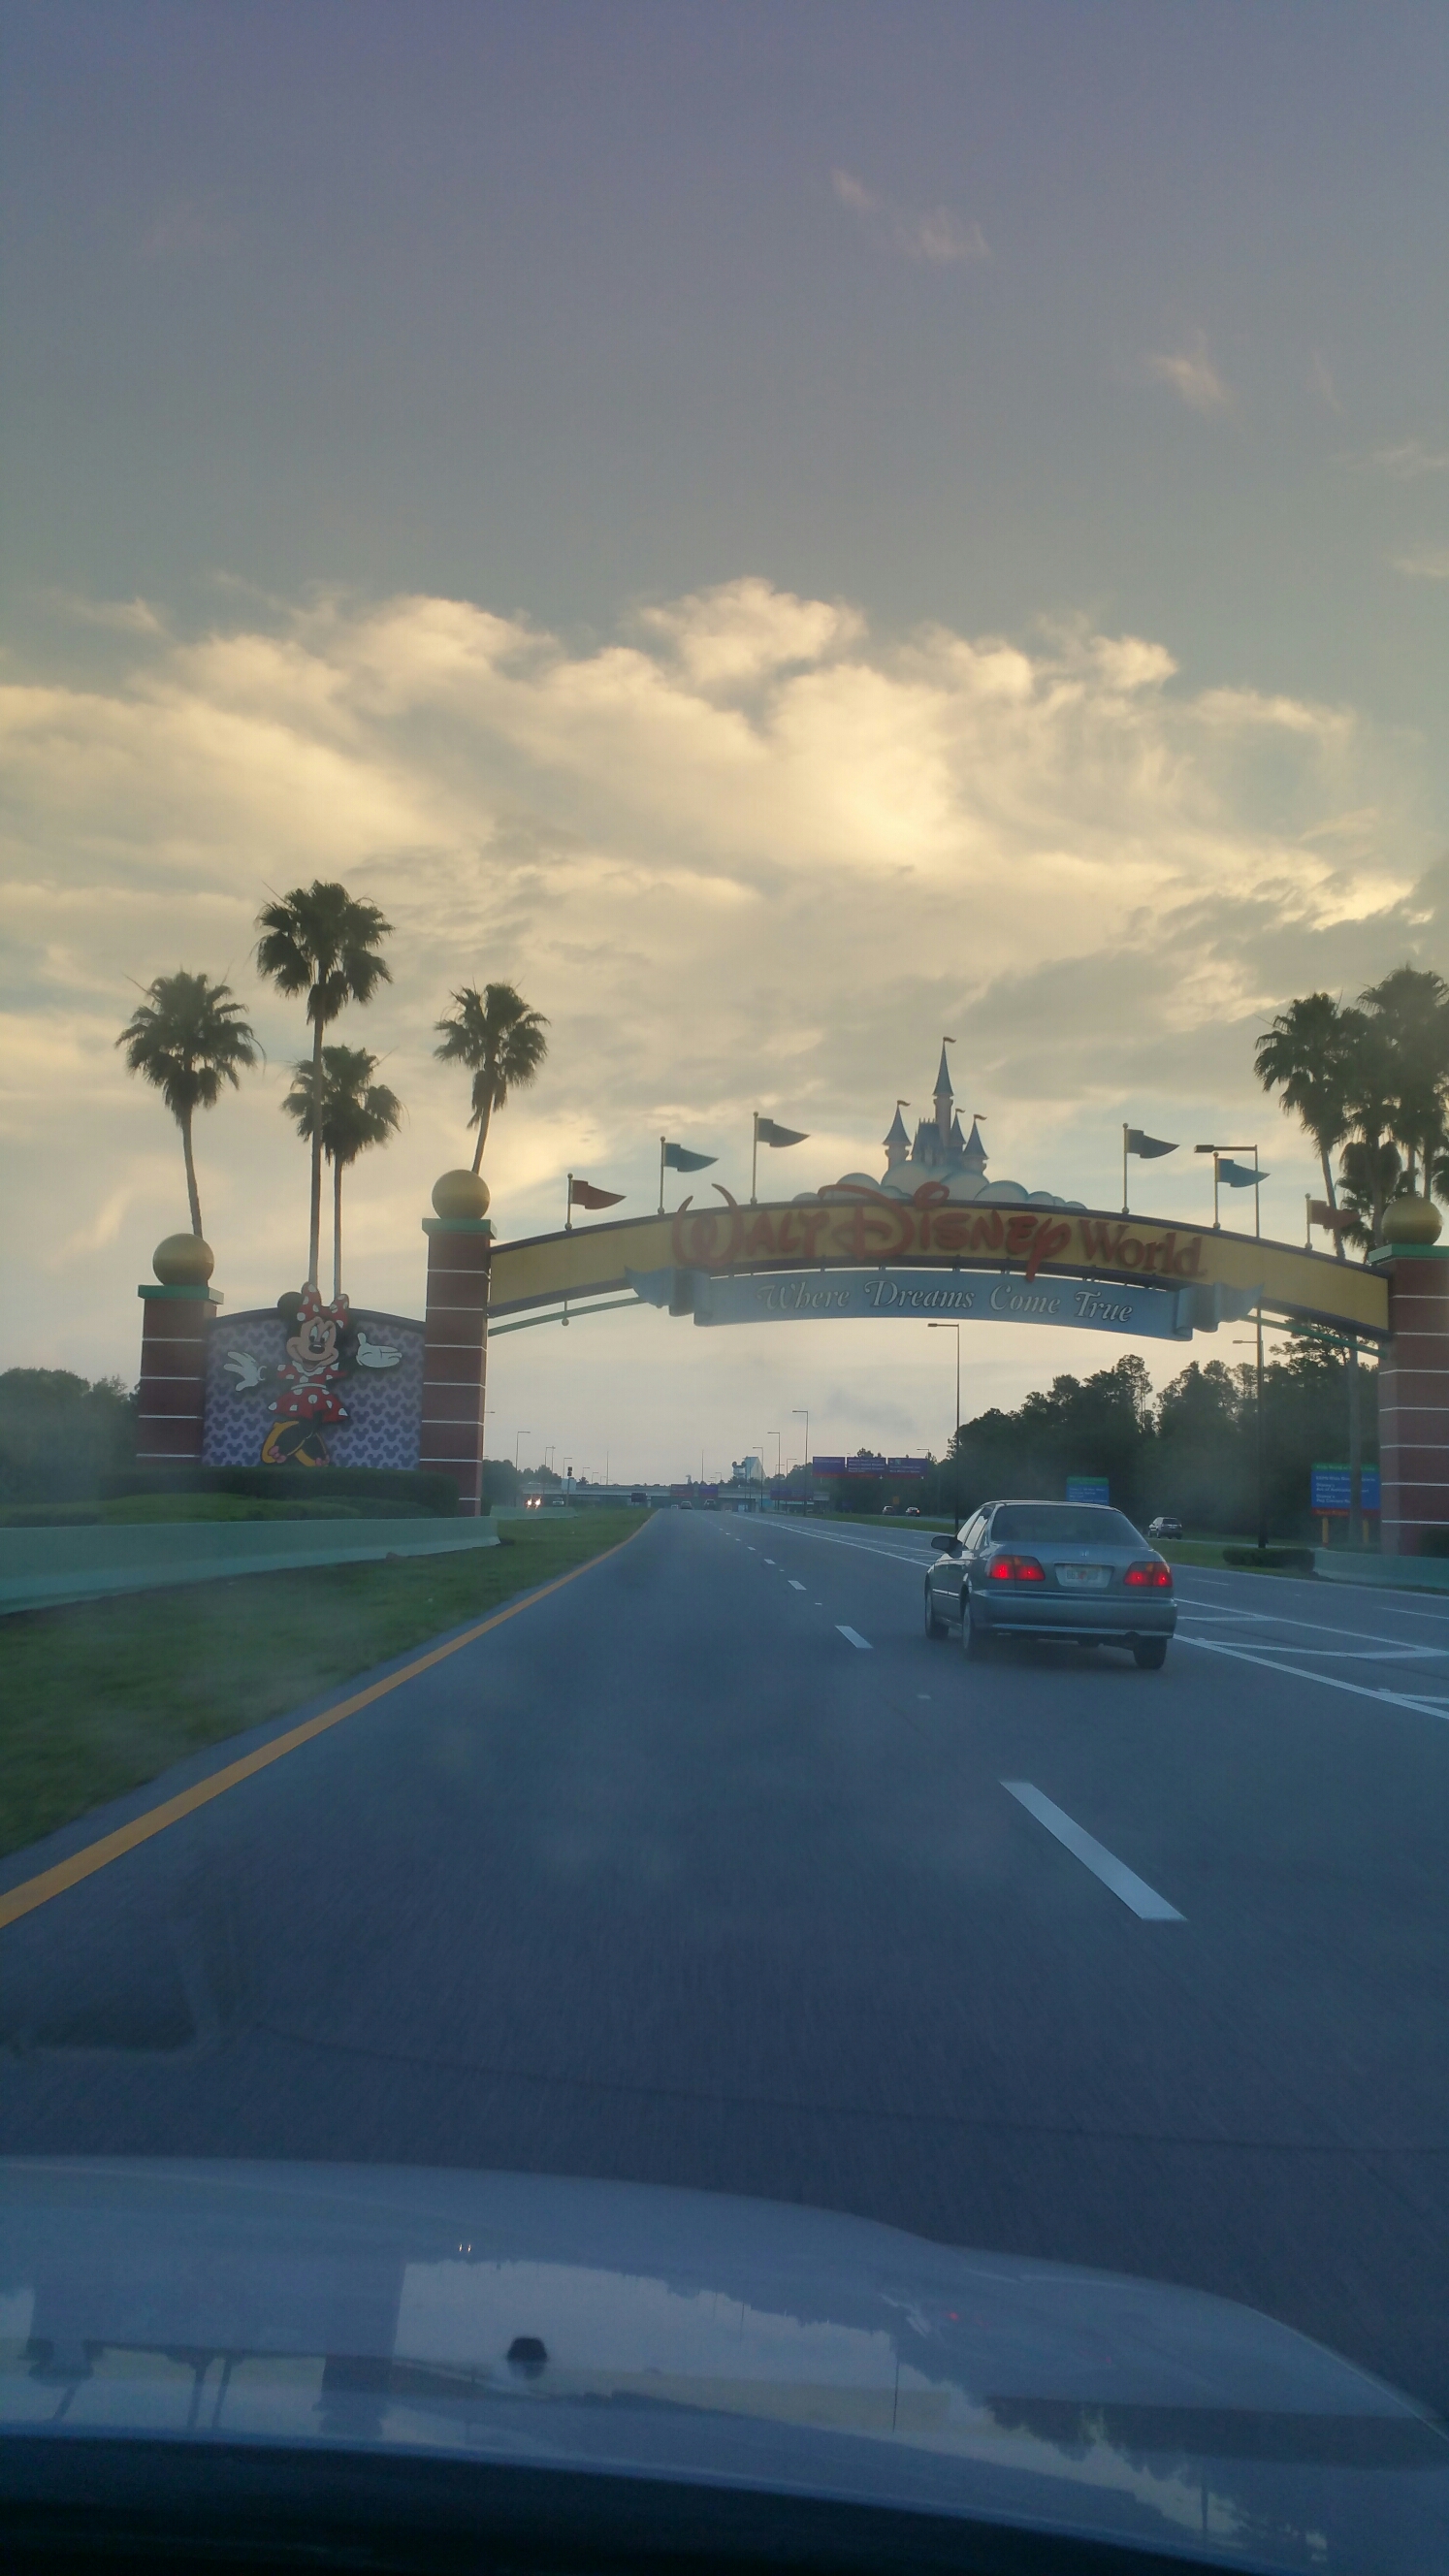 An Entry to the 'Walt Disney World, Orlando, Florida